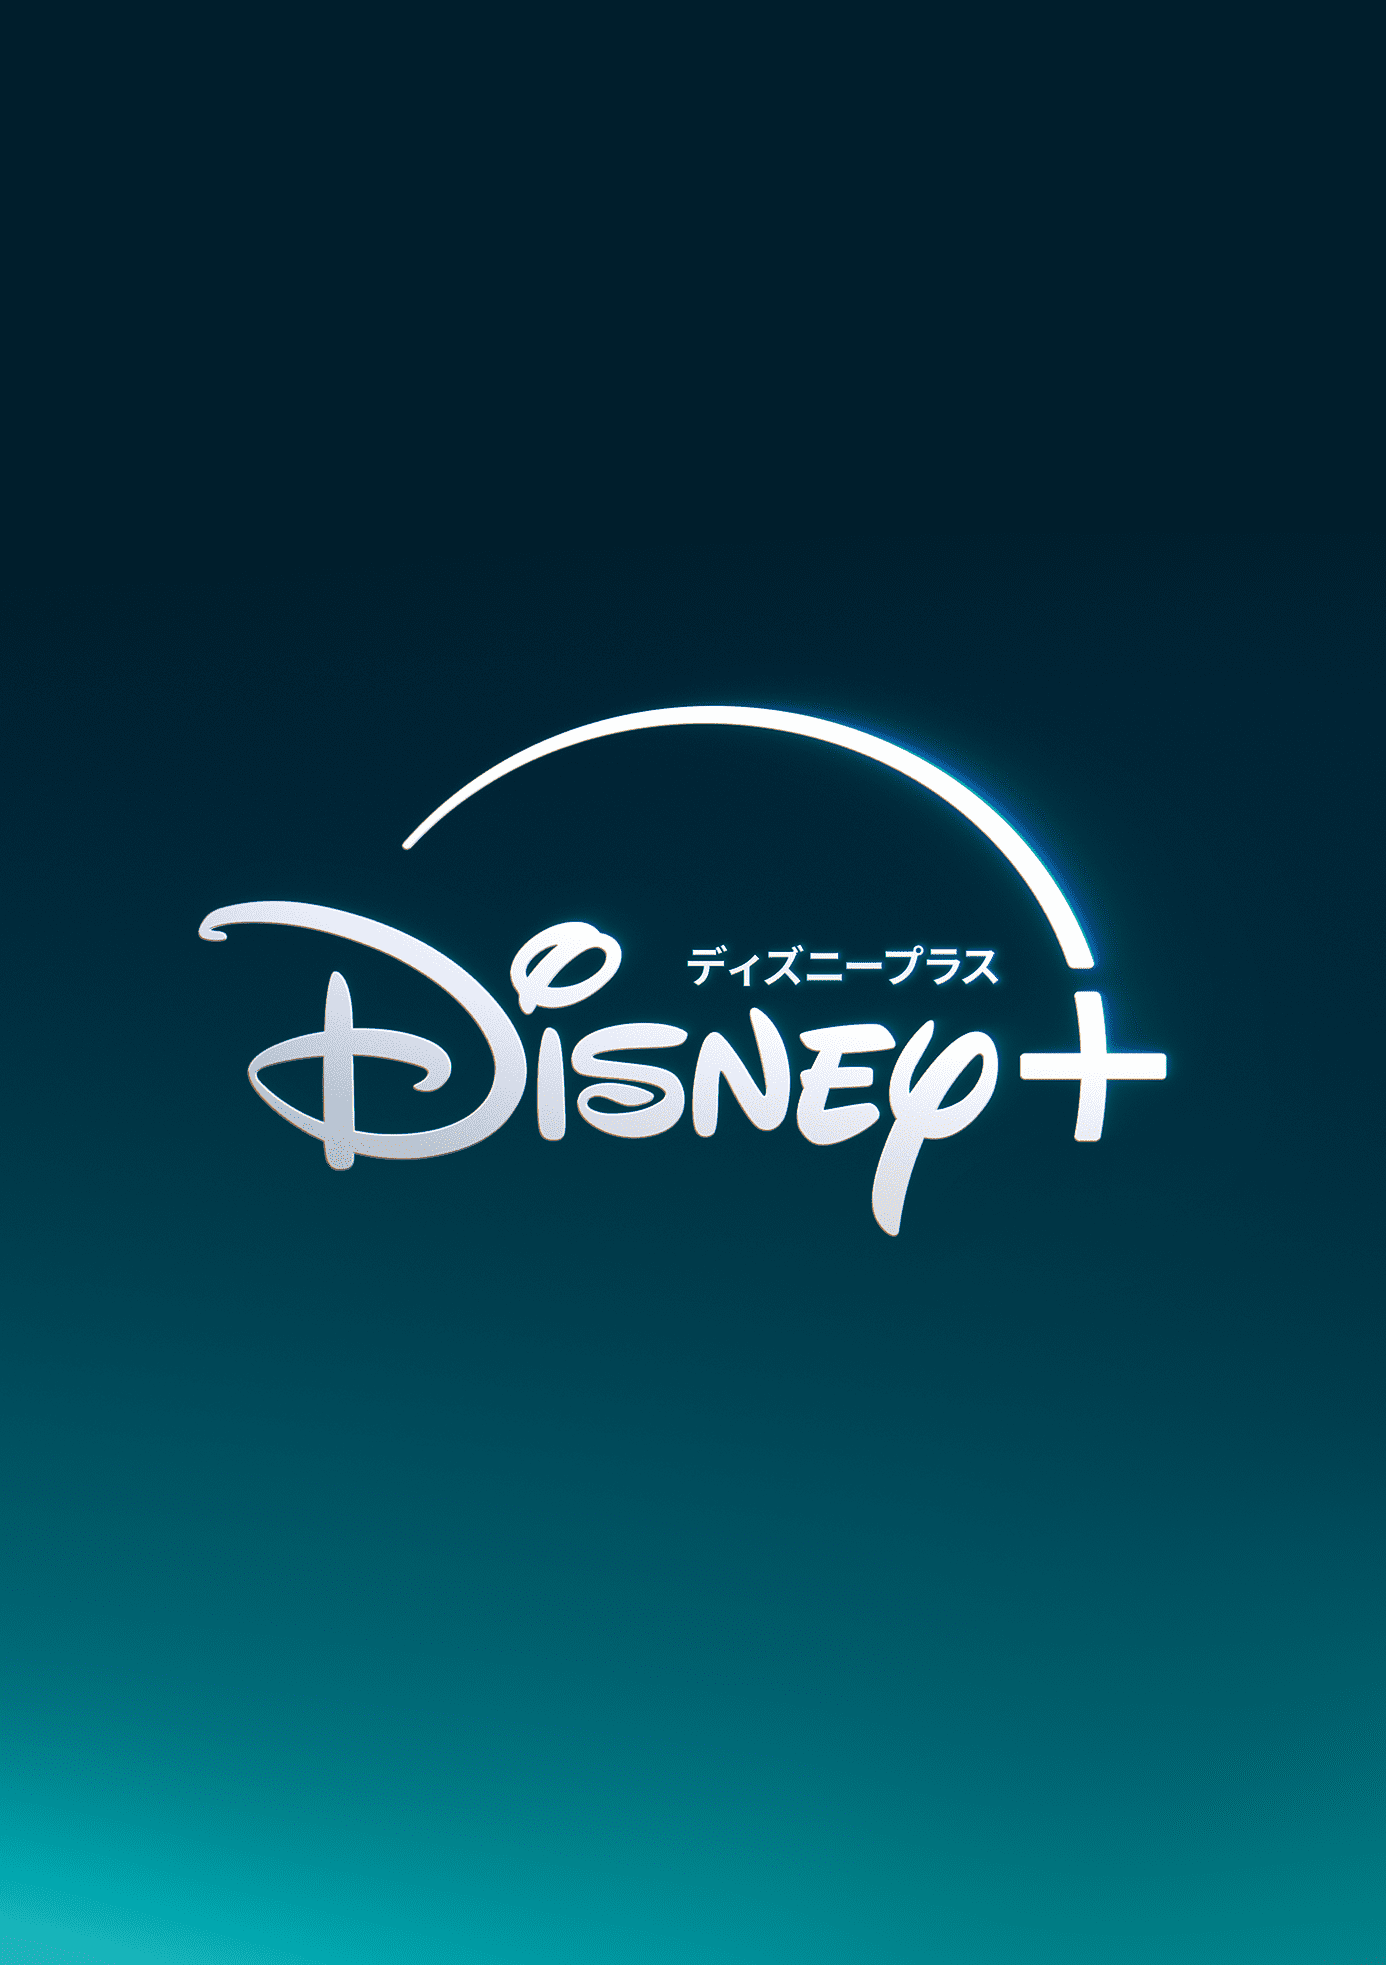 Disney+dアカウント以外<月間プラン>” border=”0″></a>
</center>



<script async=